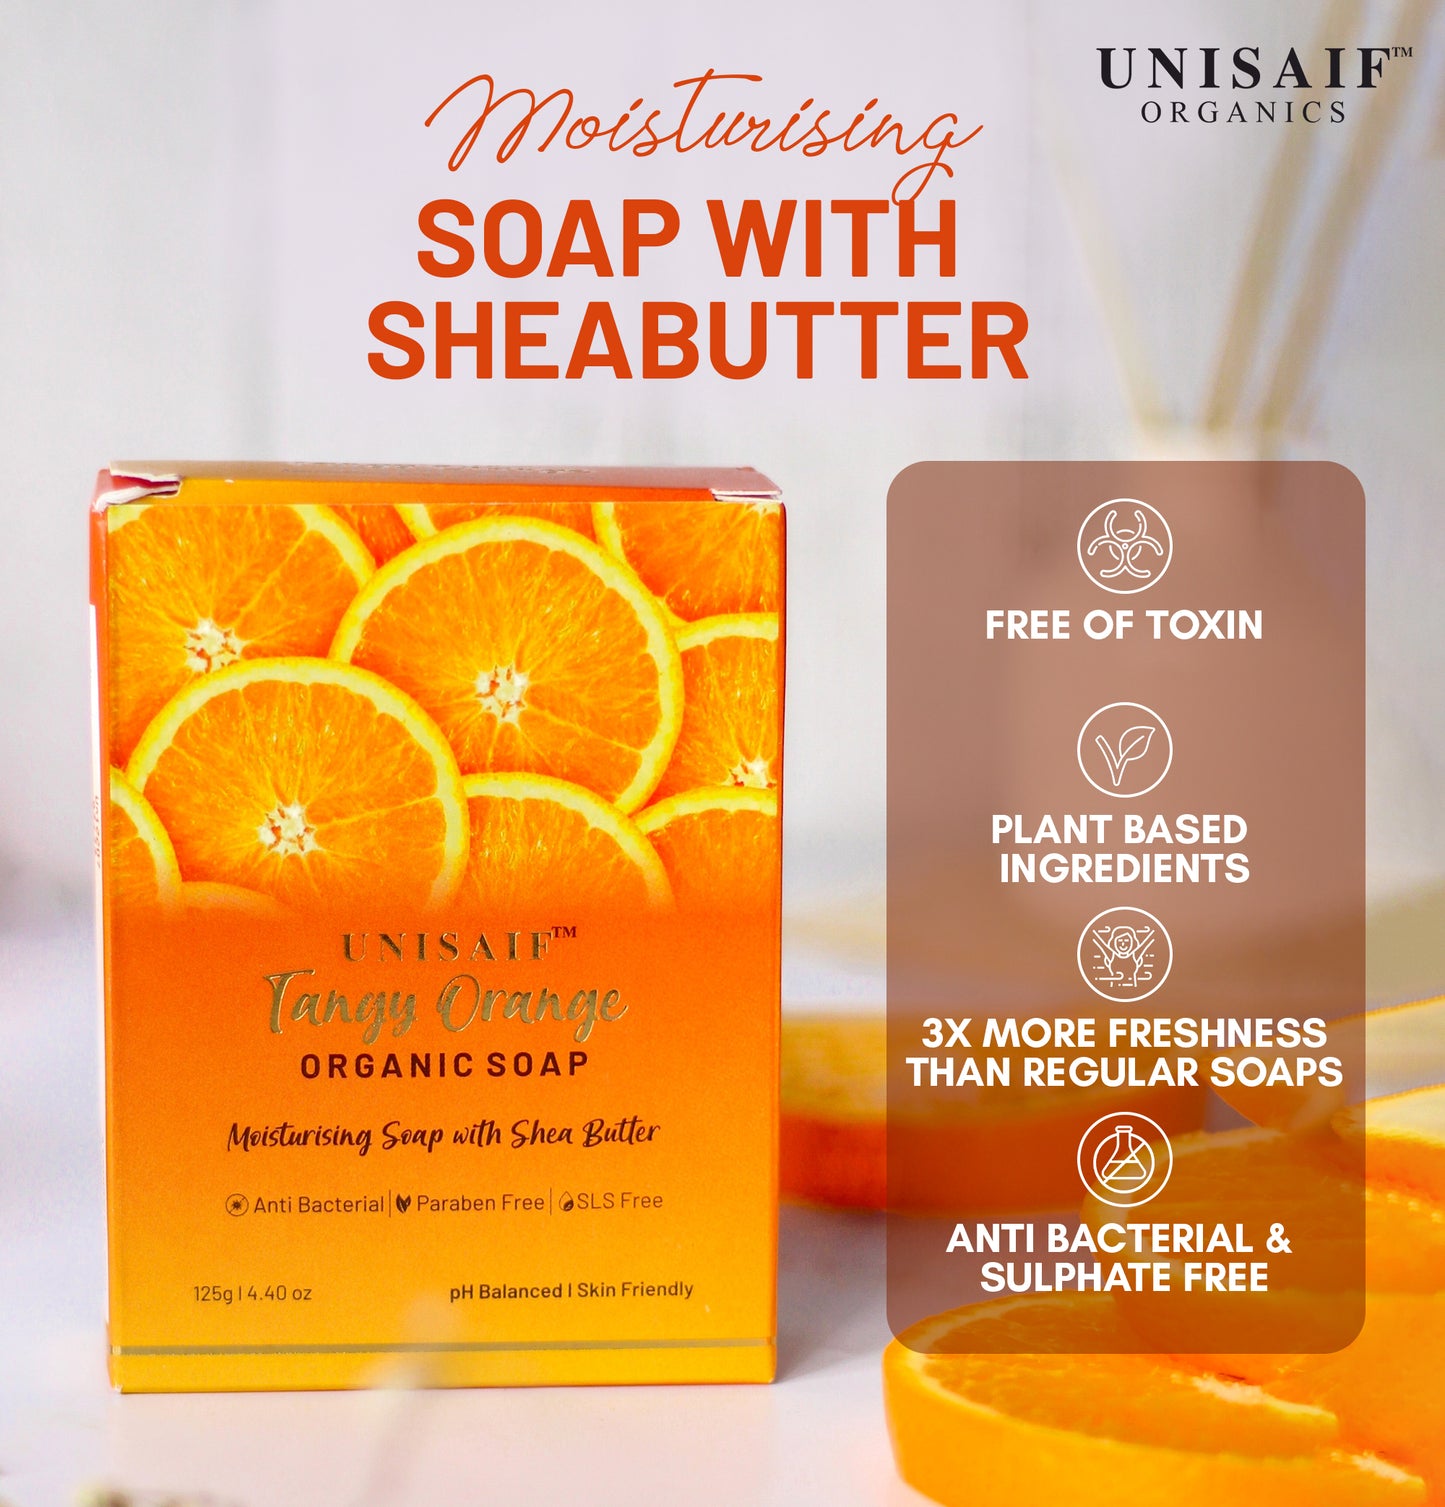 Tangy Orange Organic Soap